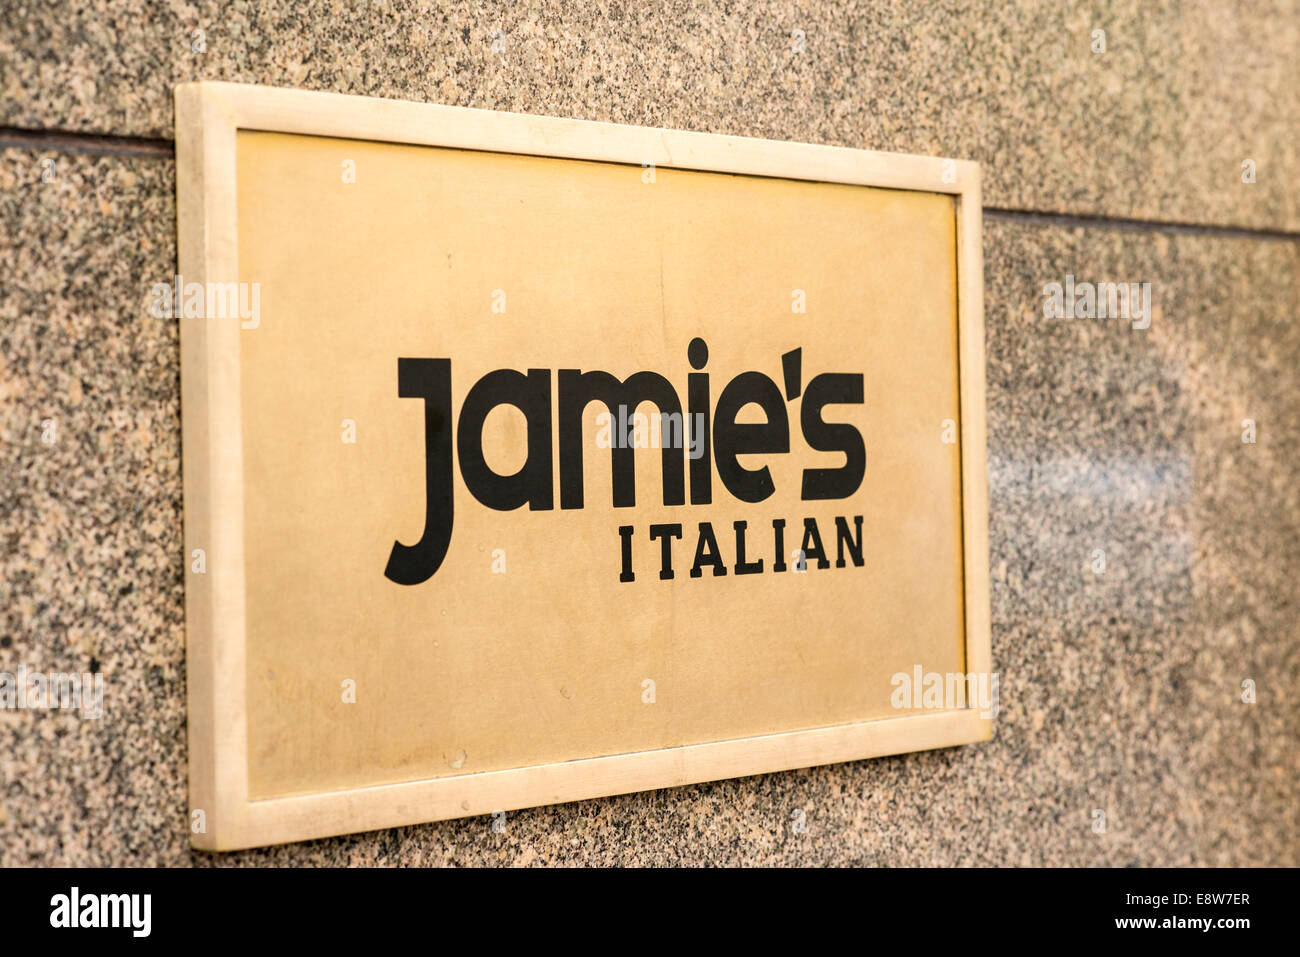 Jamie's Italian restaurant signage in Adelaide Australia Stock Photo